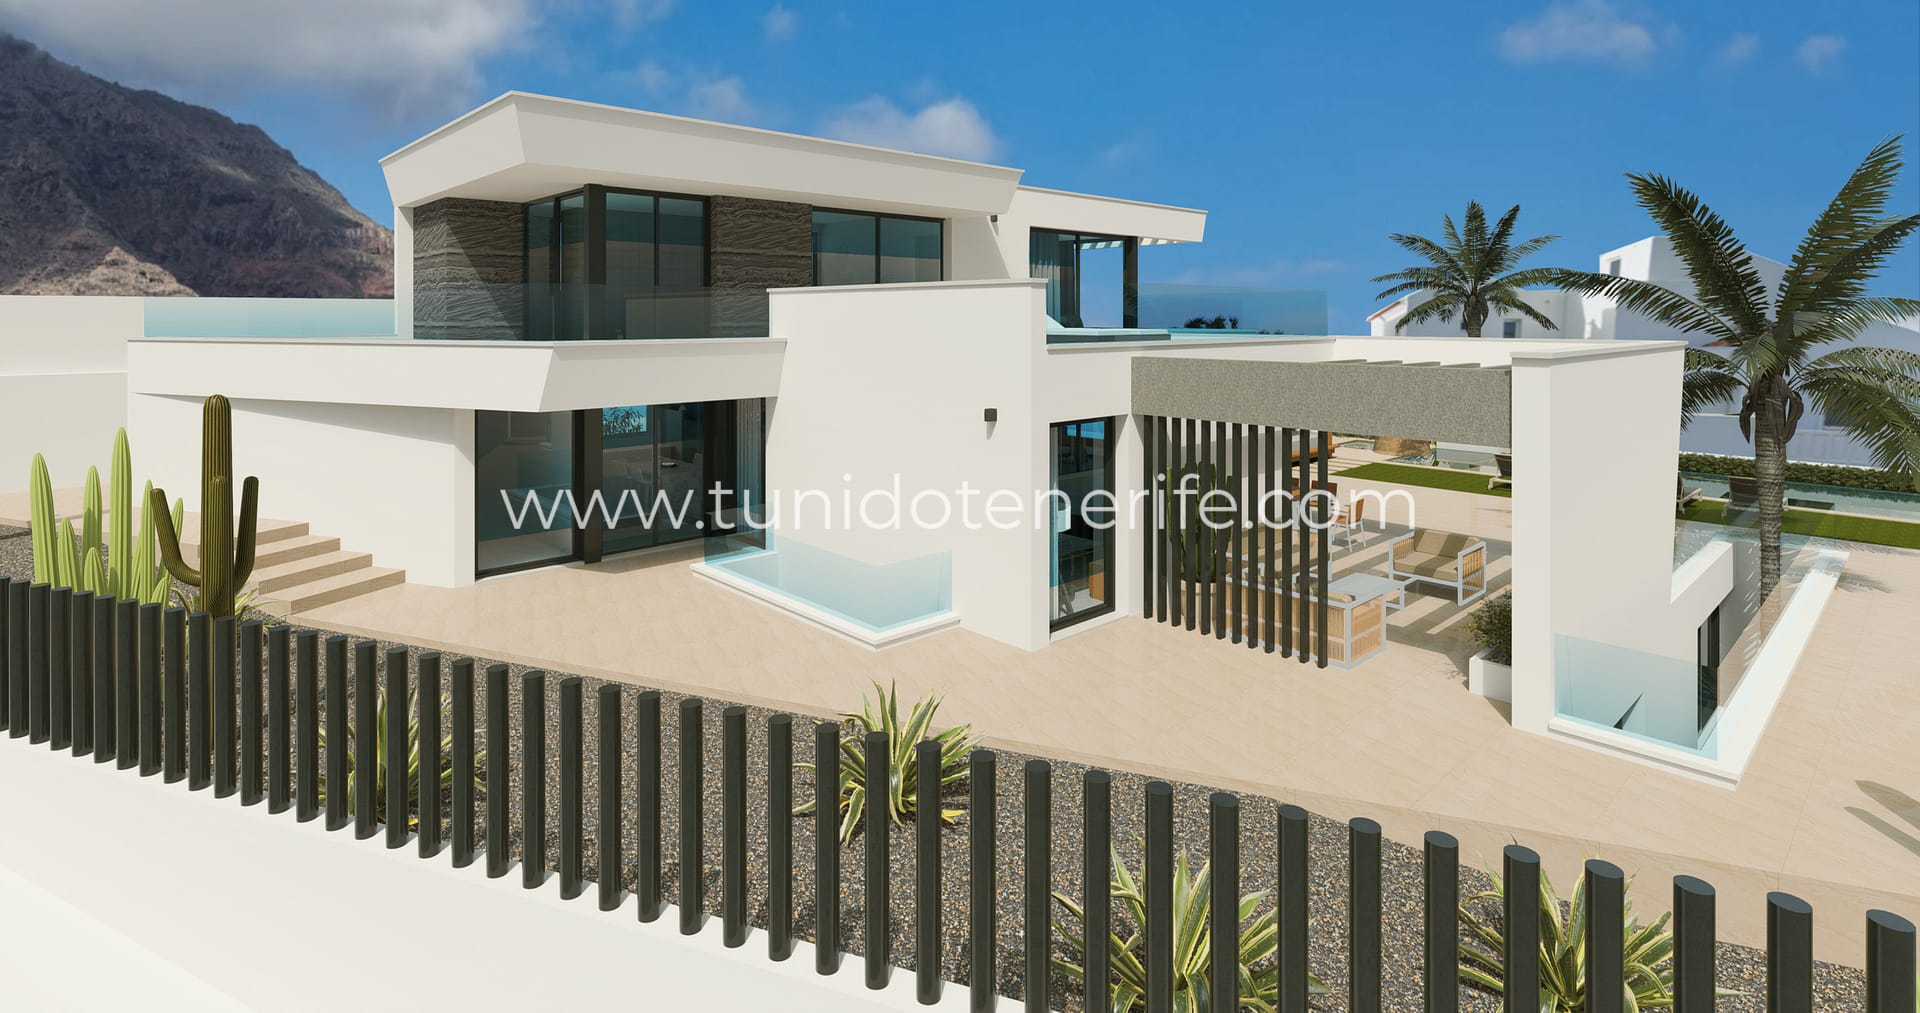 Villa zu verkaufen in Teneriffa Süd, Madroñal de Fañabe